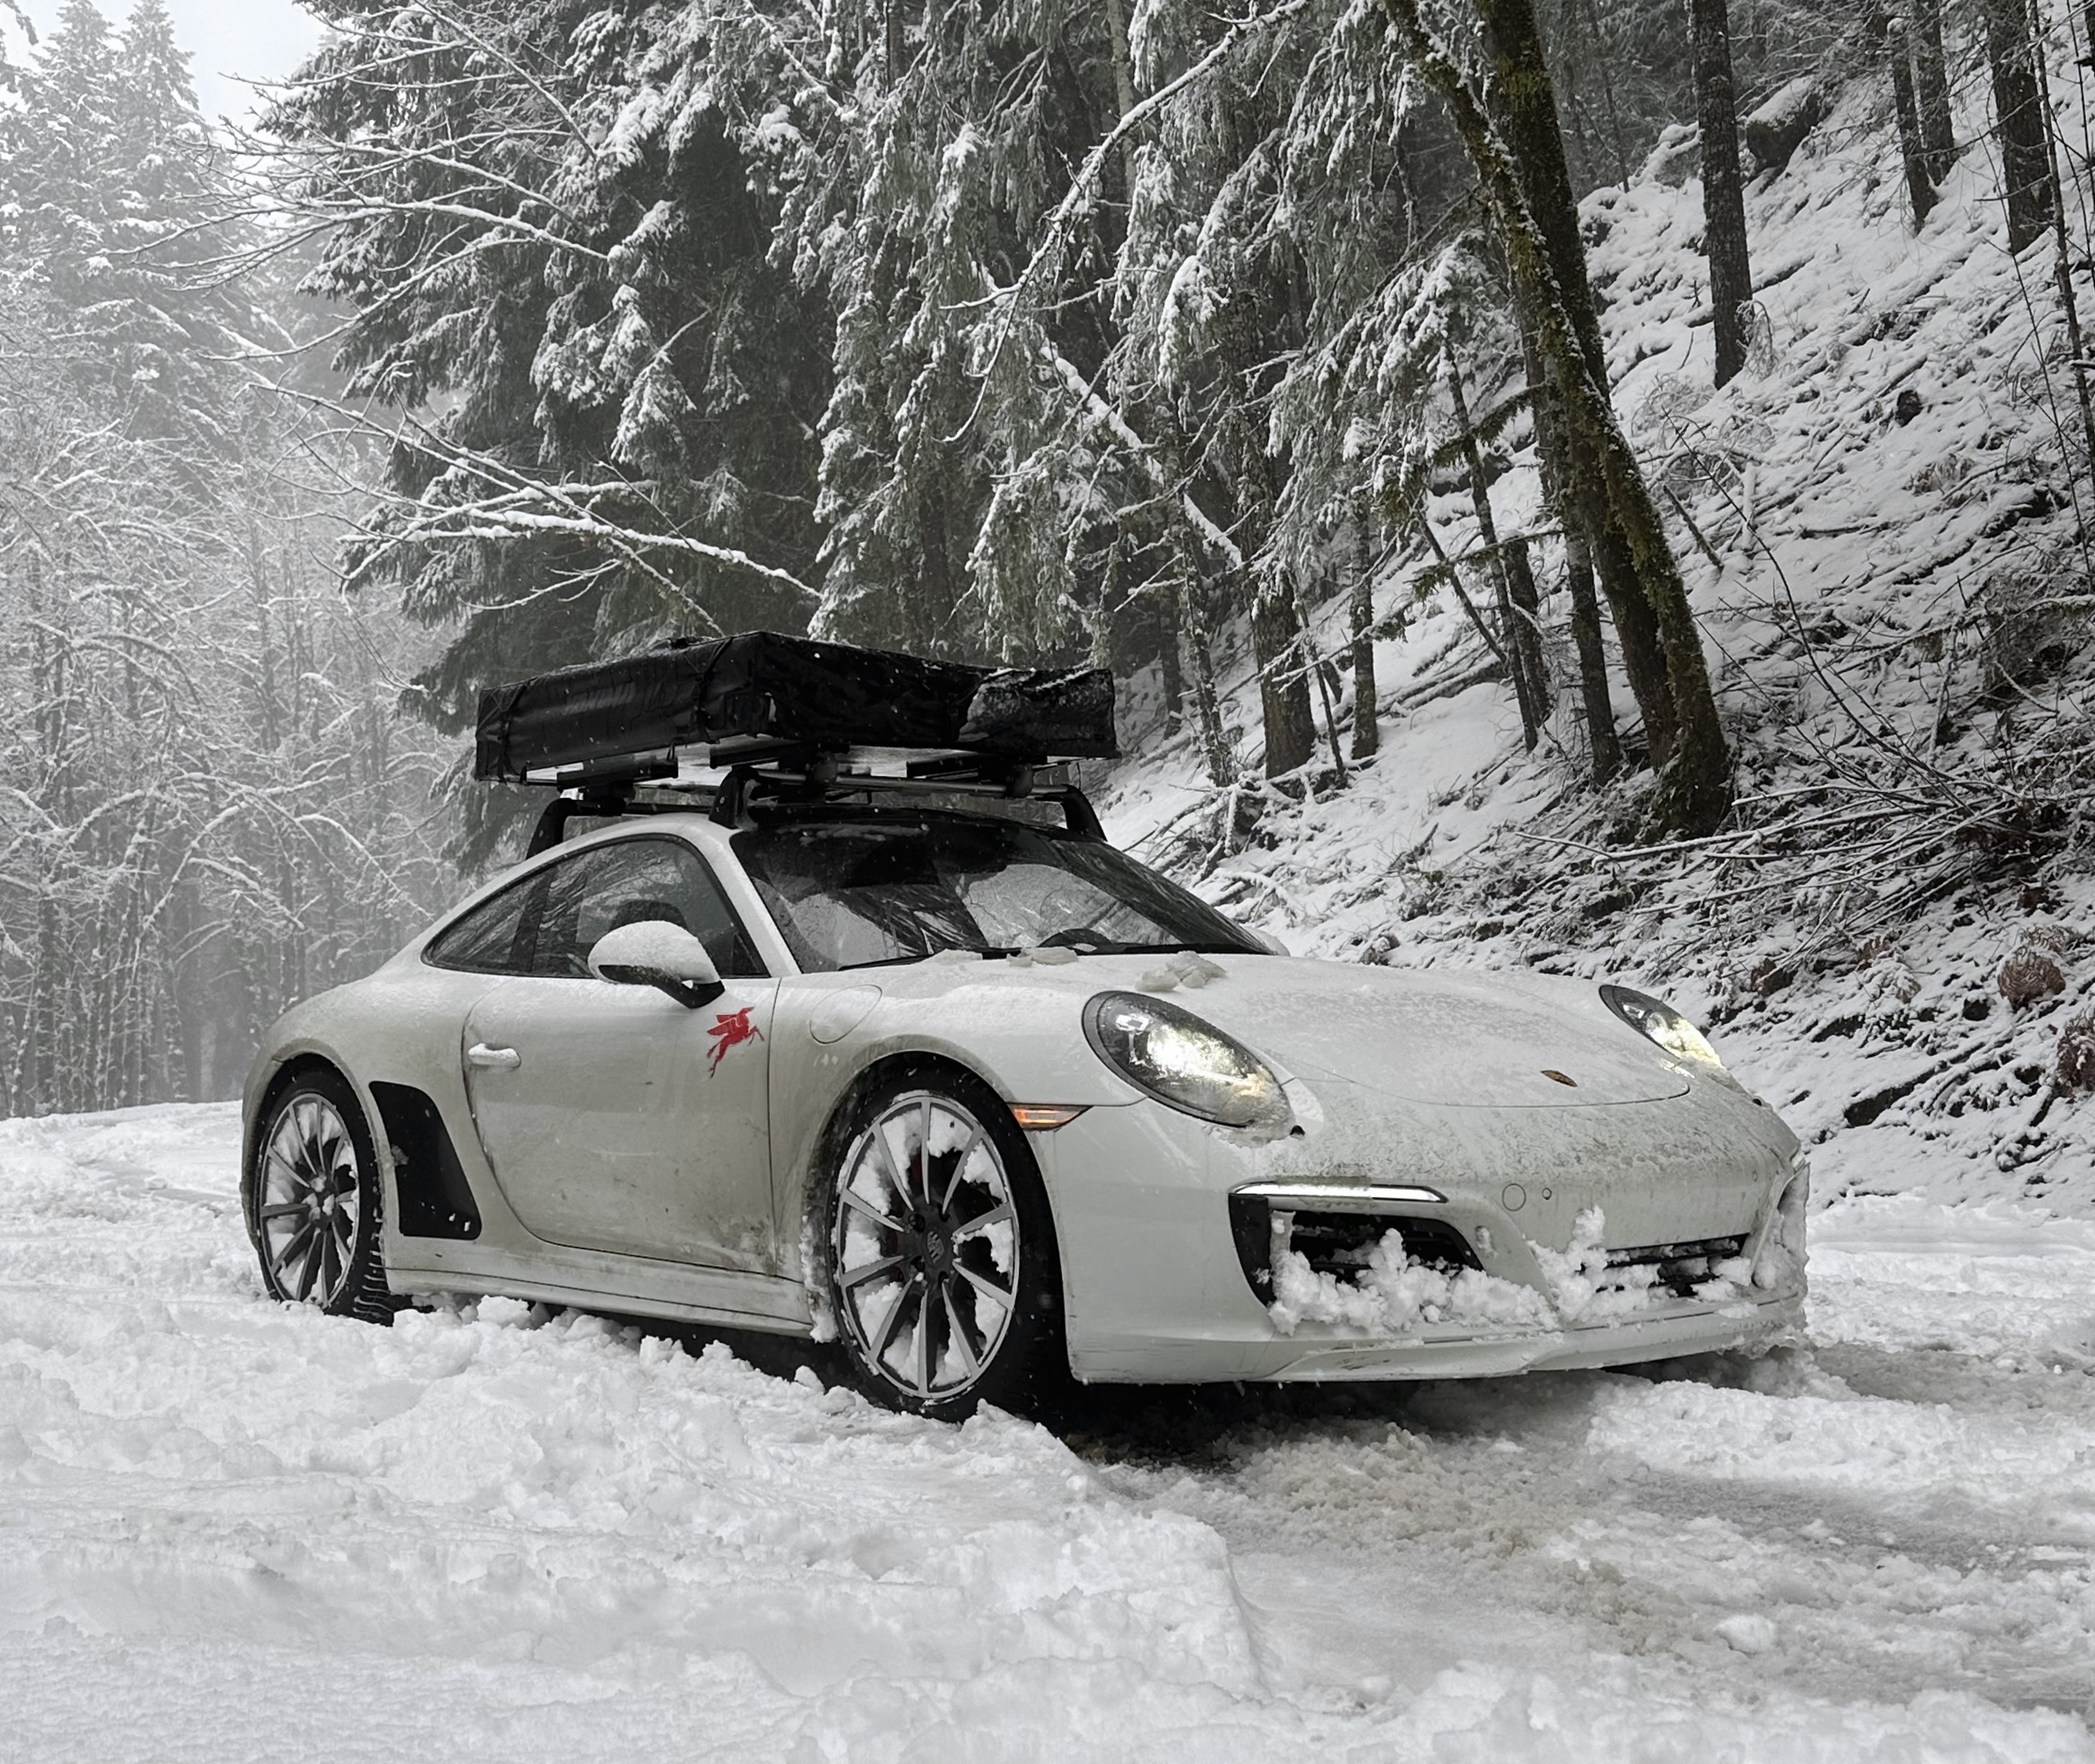 White Porsche 911 Carrera 4 in snow on mountain road